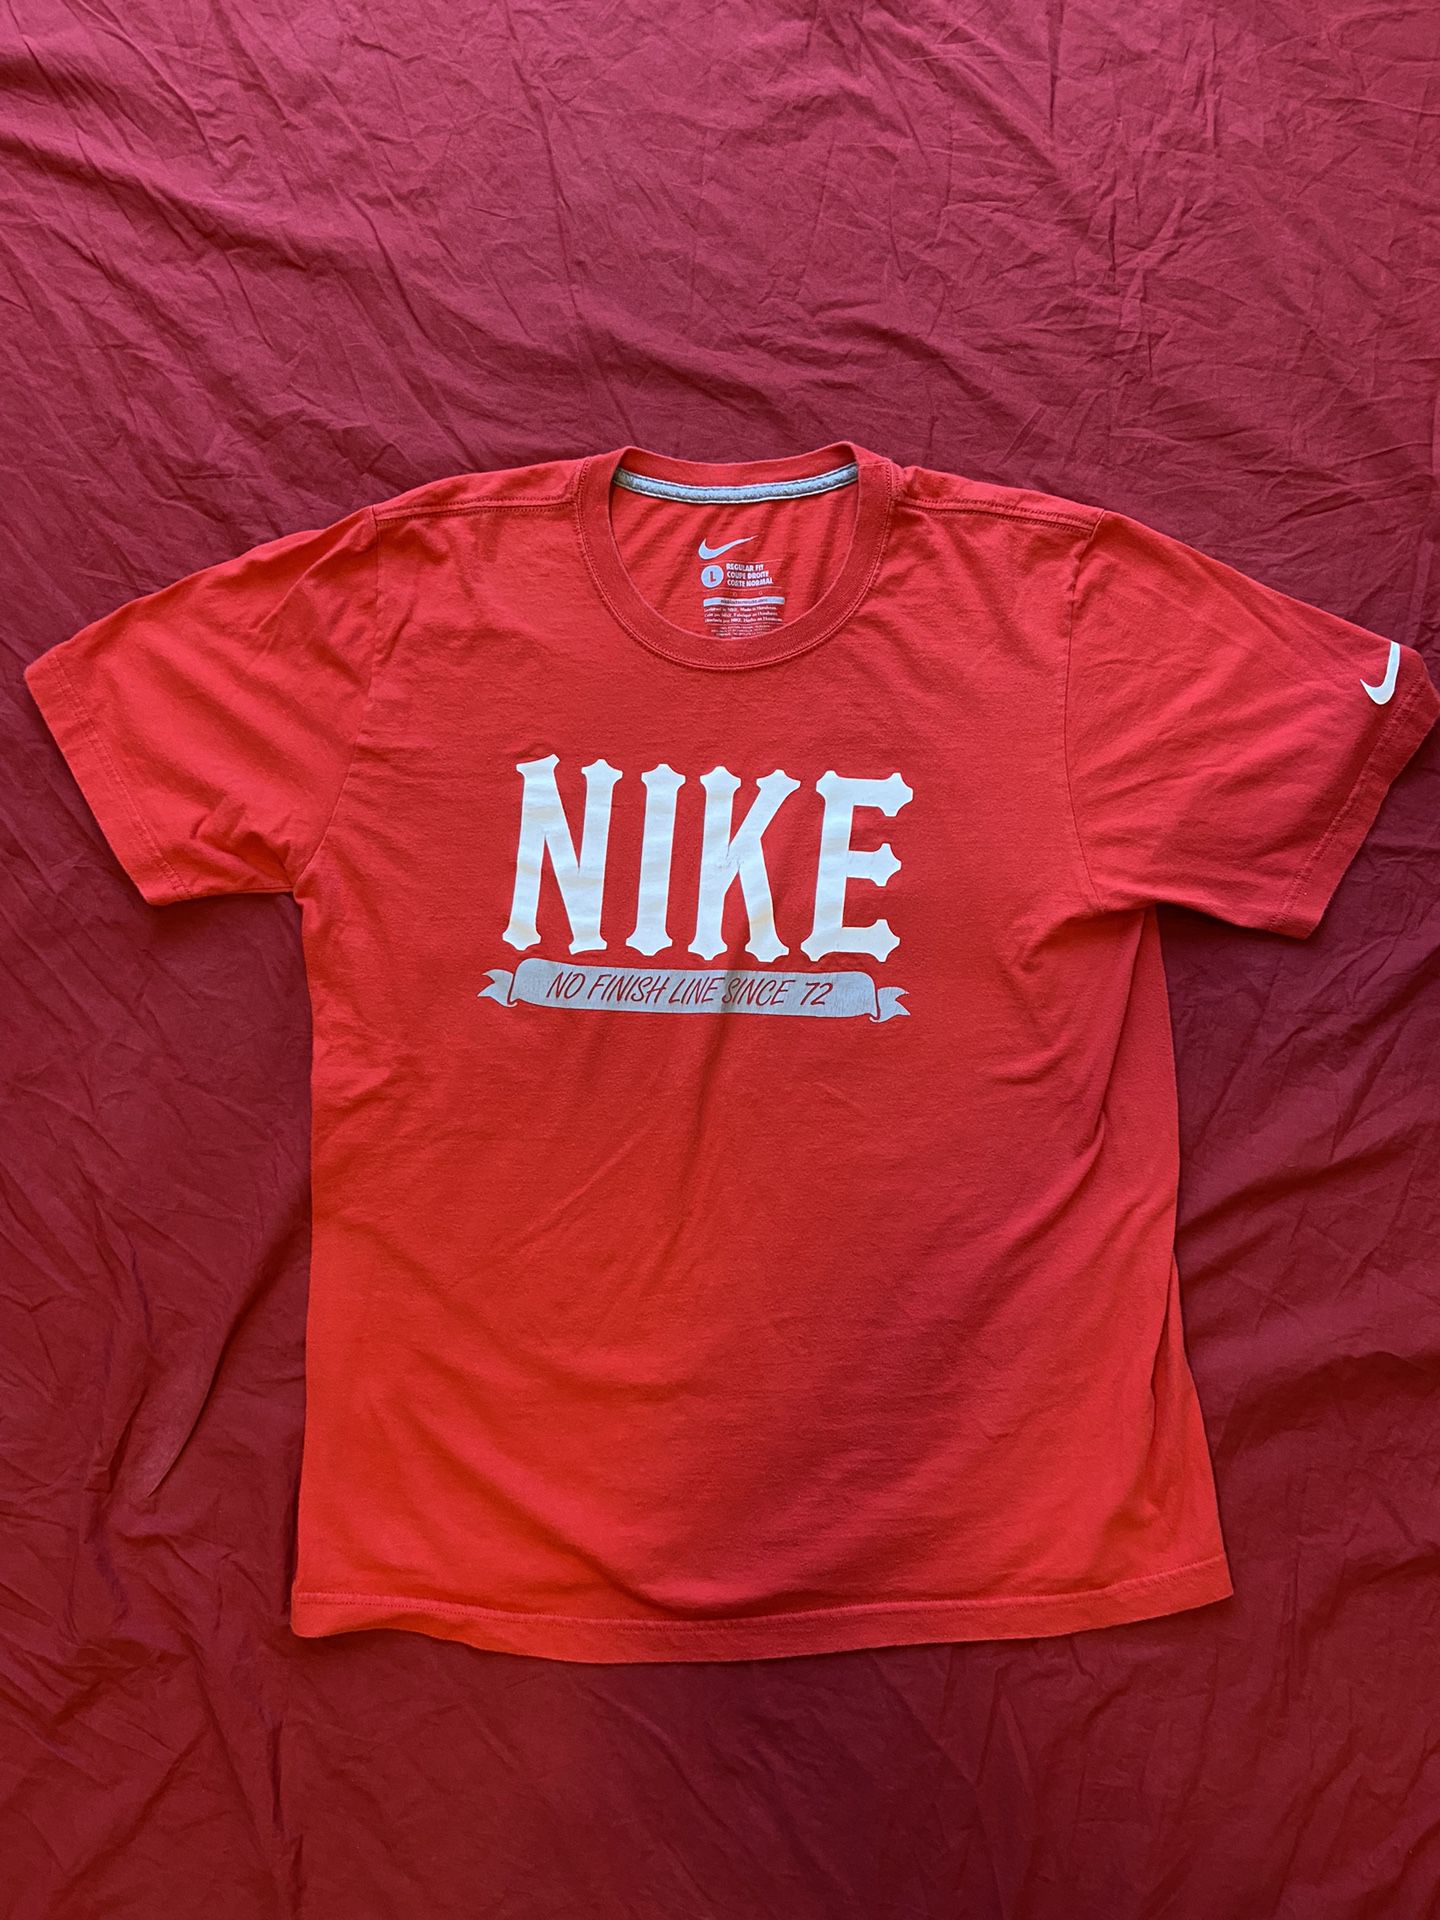 Men’s Nike T-Shirt Size Large Red